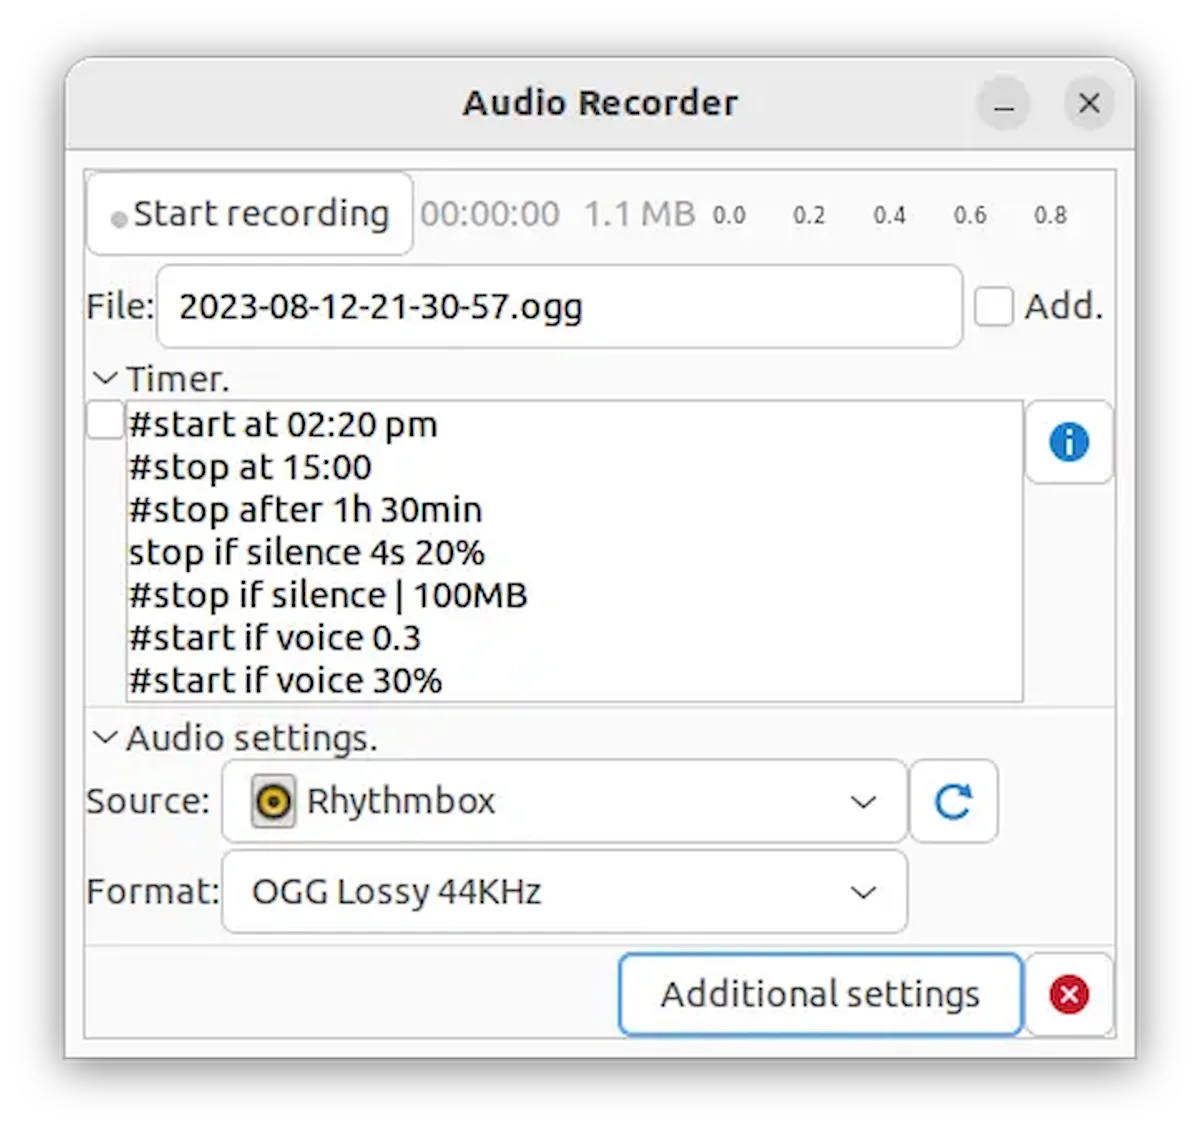 Como instalar o gravador Audio Recorder no Ubuntu e derivados